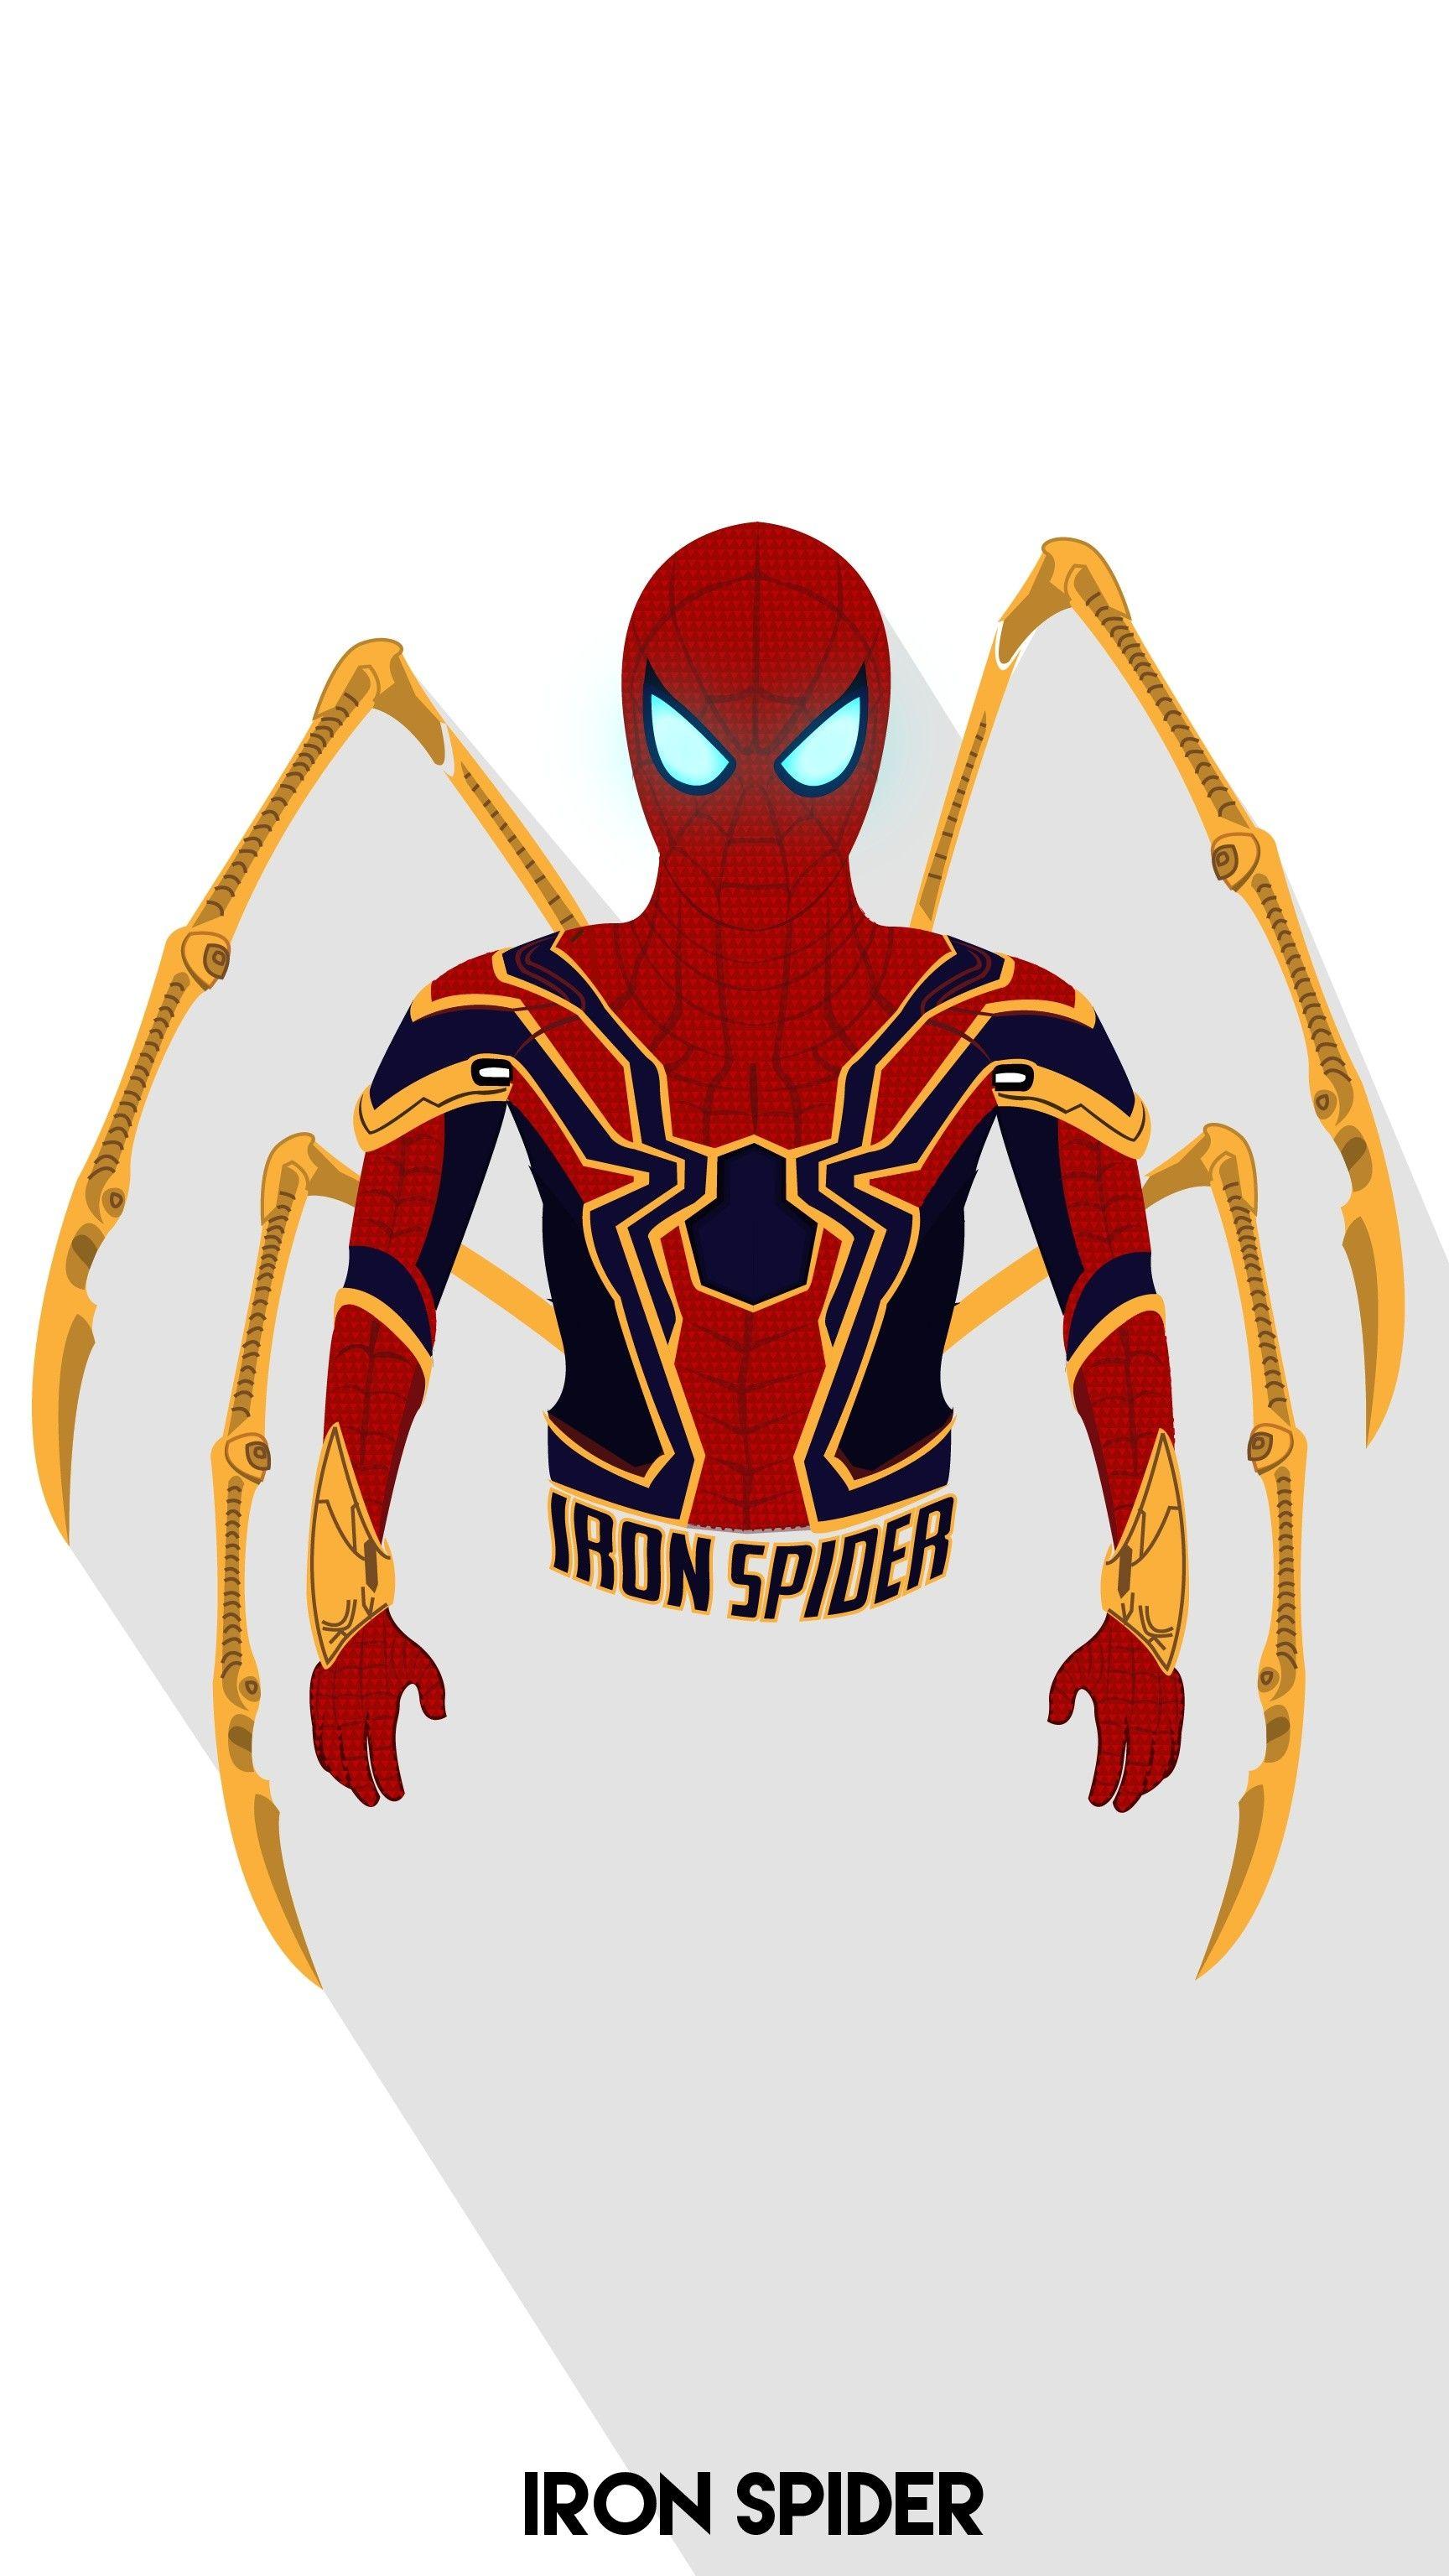 Iron Spider Logo - Iron Spider, Atharva Jumde